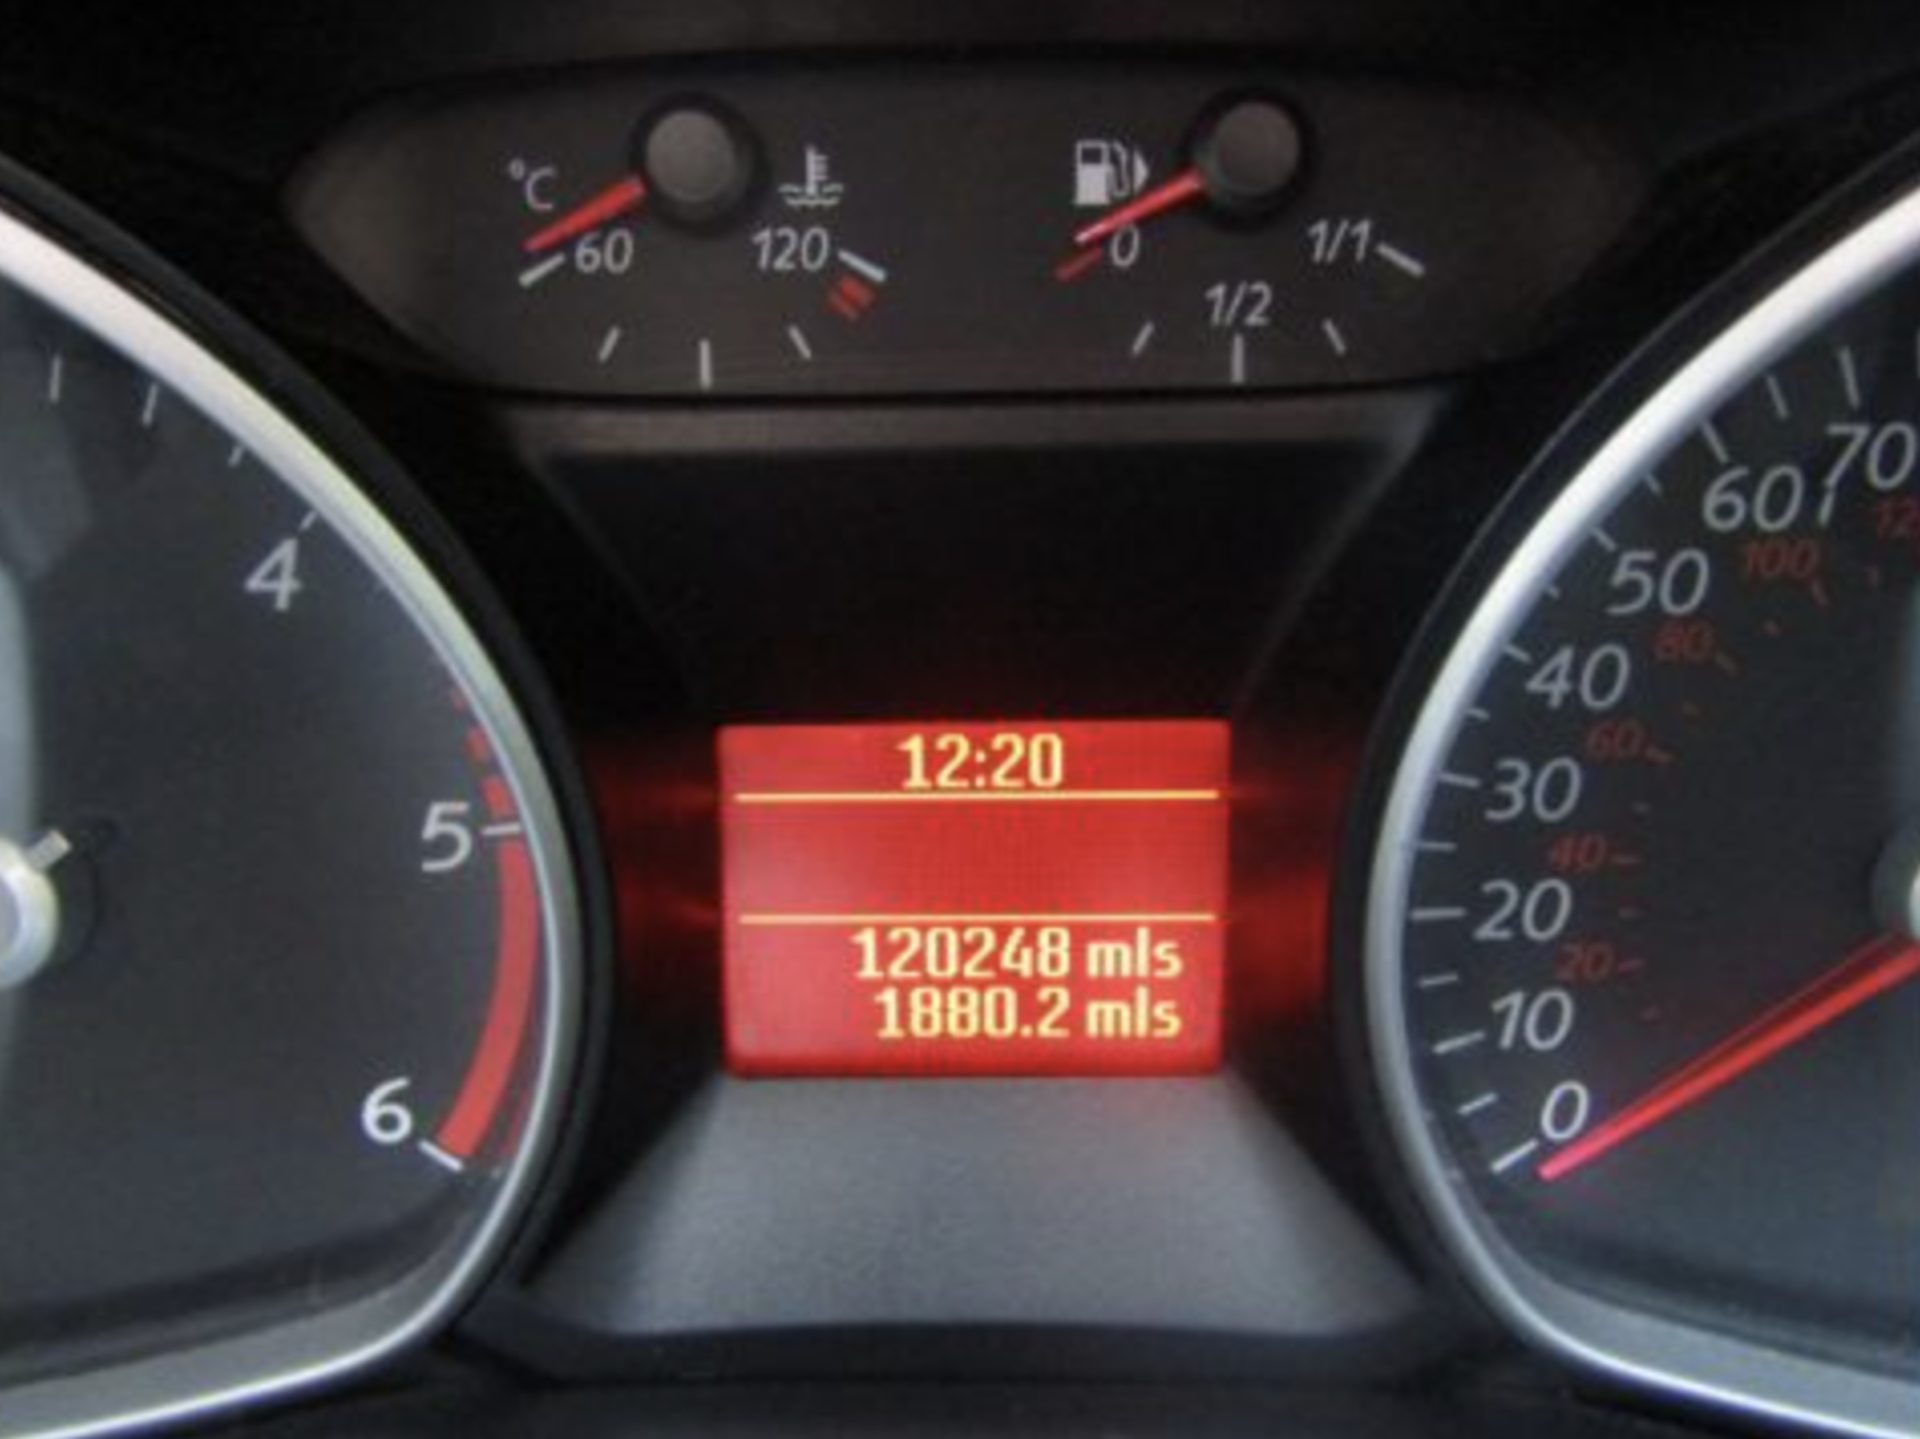 2009 Ford S-Max MPV 1800cc Turbo Diesel - Image 10 of 14